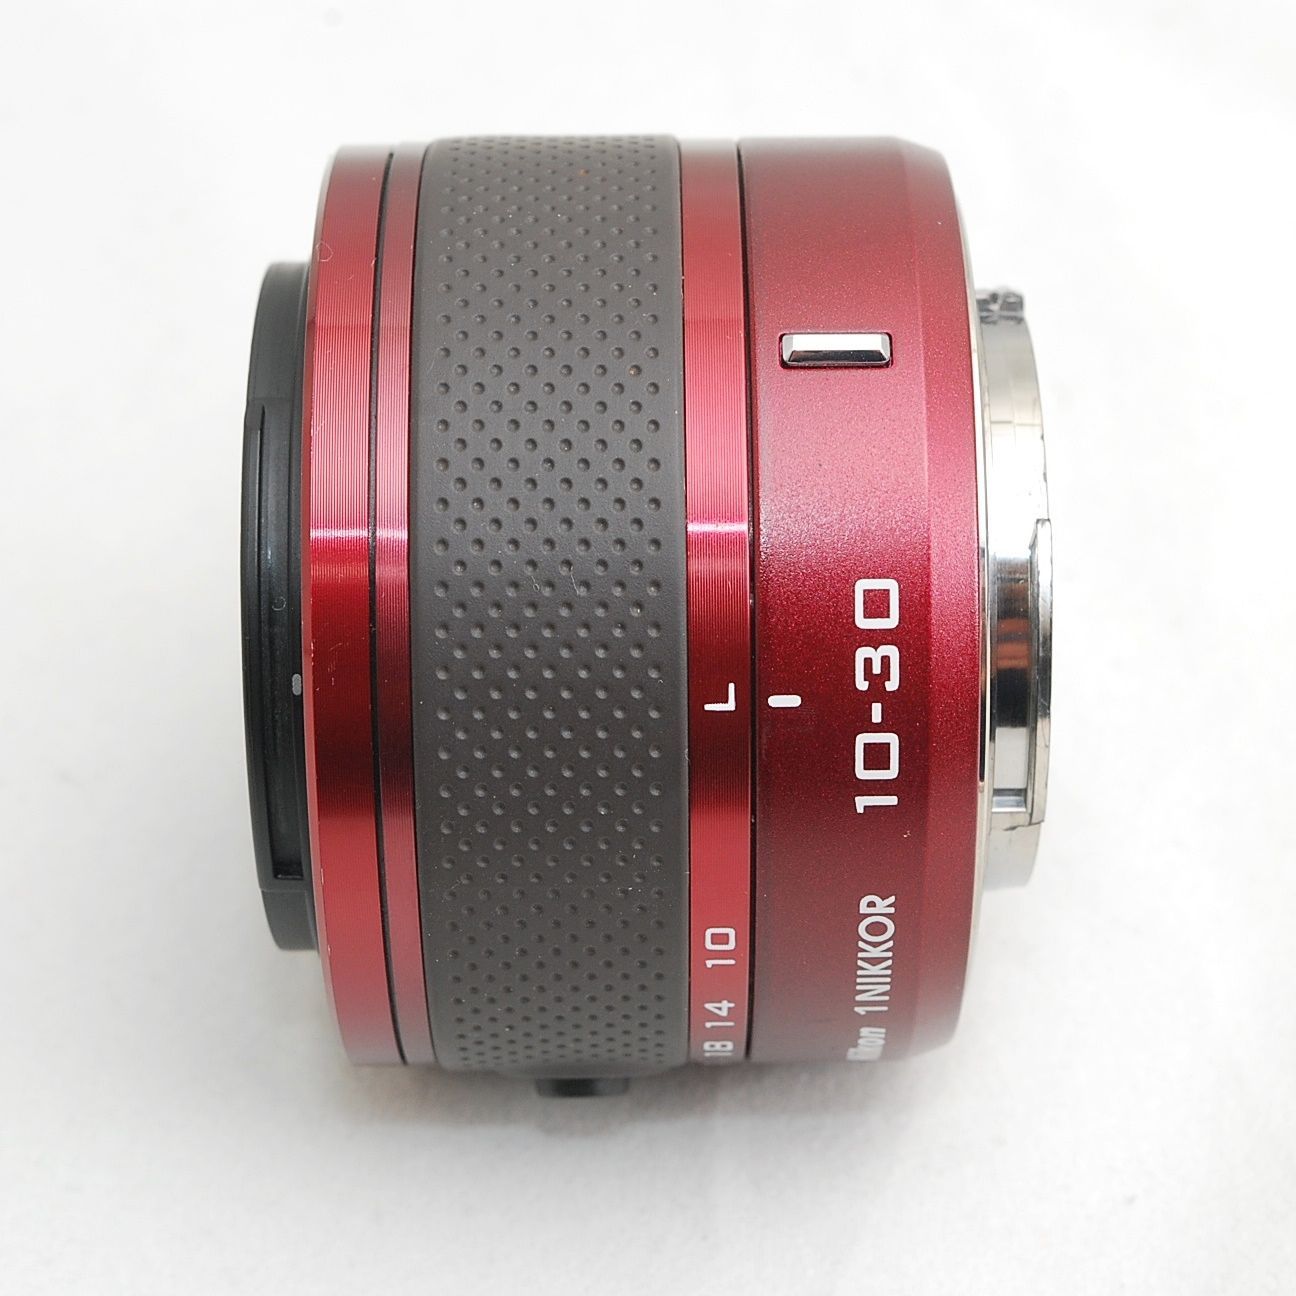 Nikon 標準ズームレンズ1 NIKKOR VR 10-30mm f 3.5-5.6 PD-ZOOM